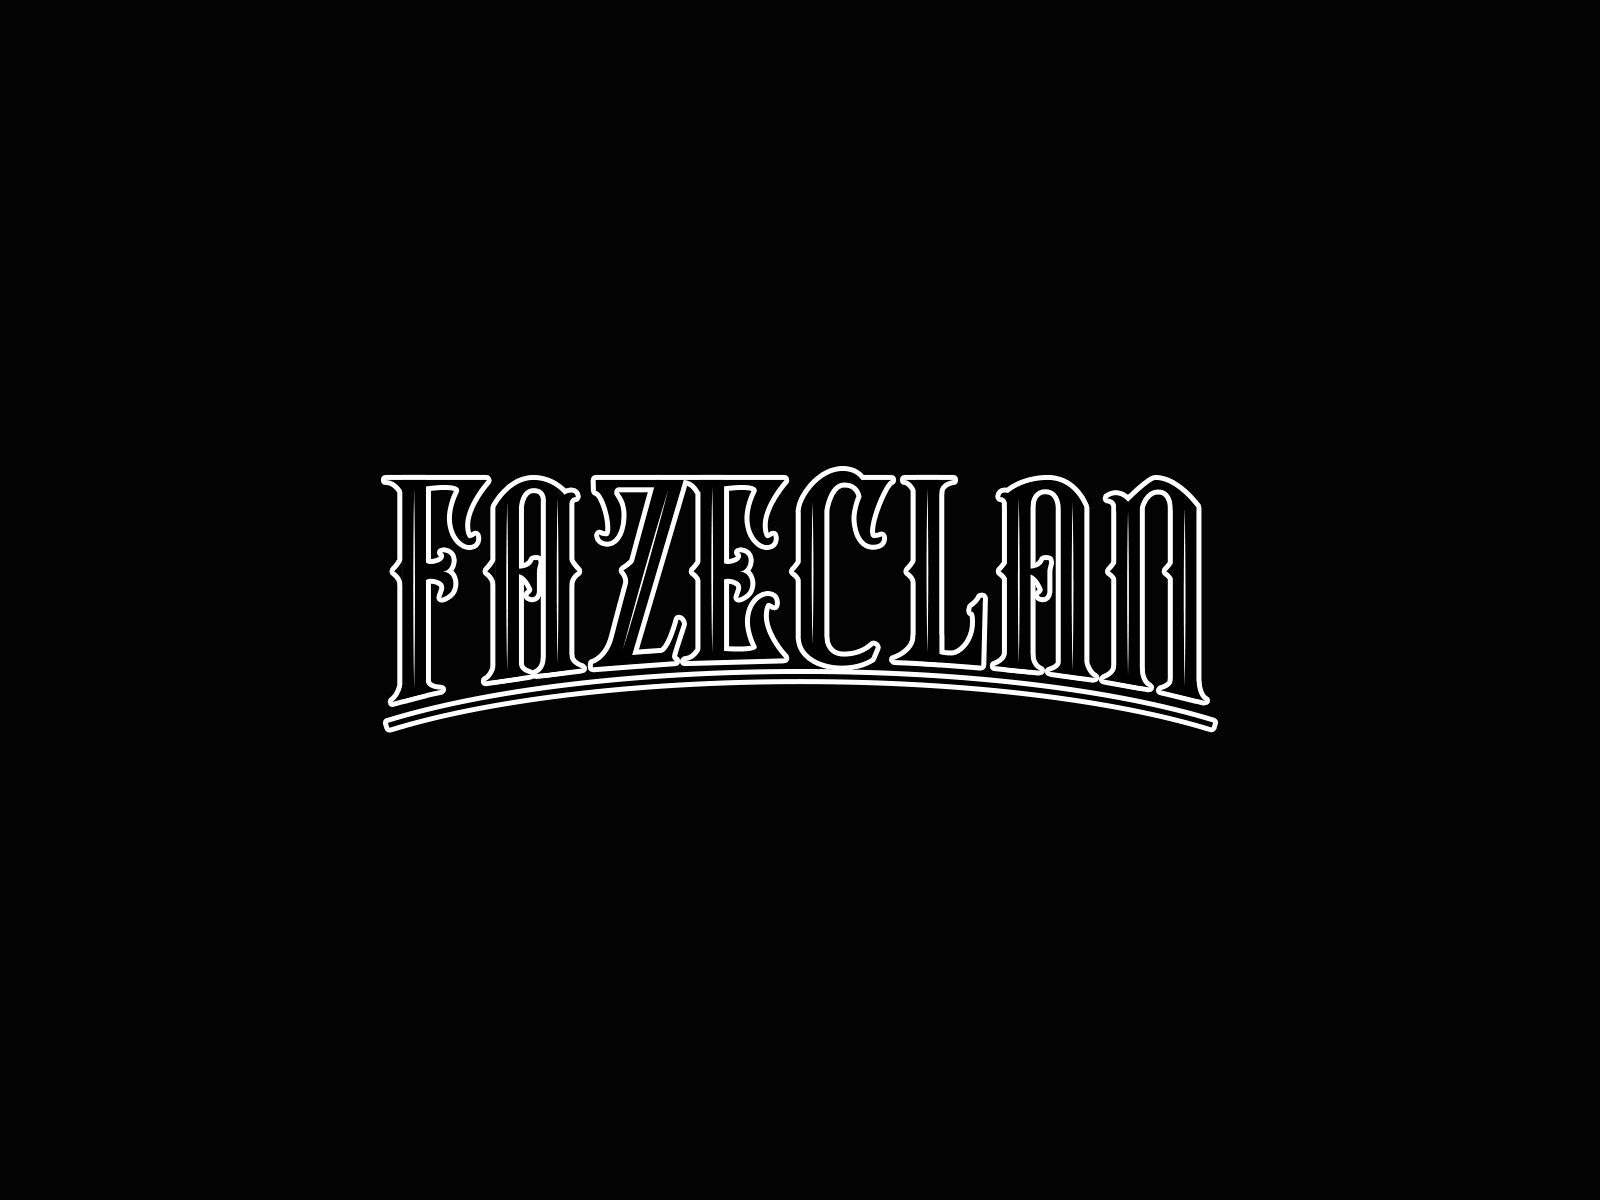 Faze Clan Type Logo by Markis Leopoldo Angelo Elo on Dribbble